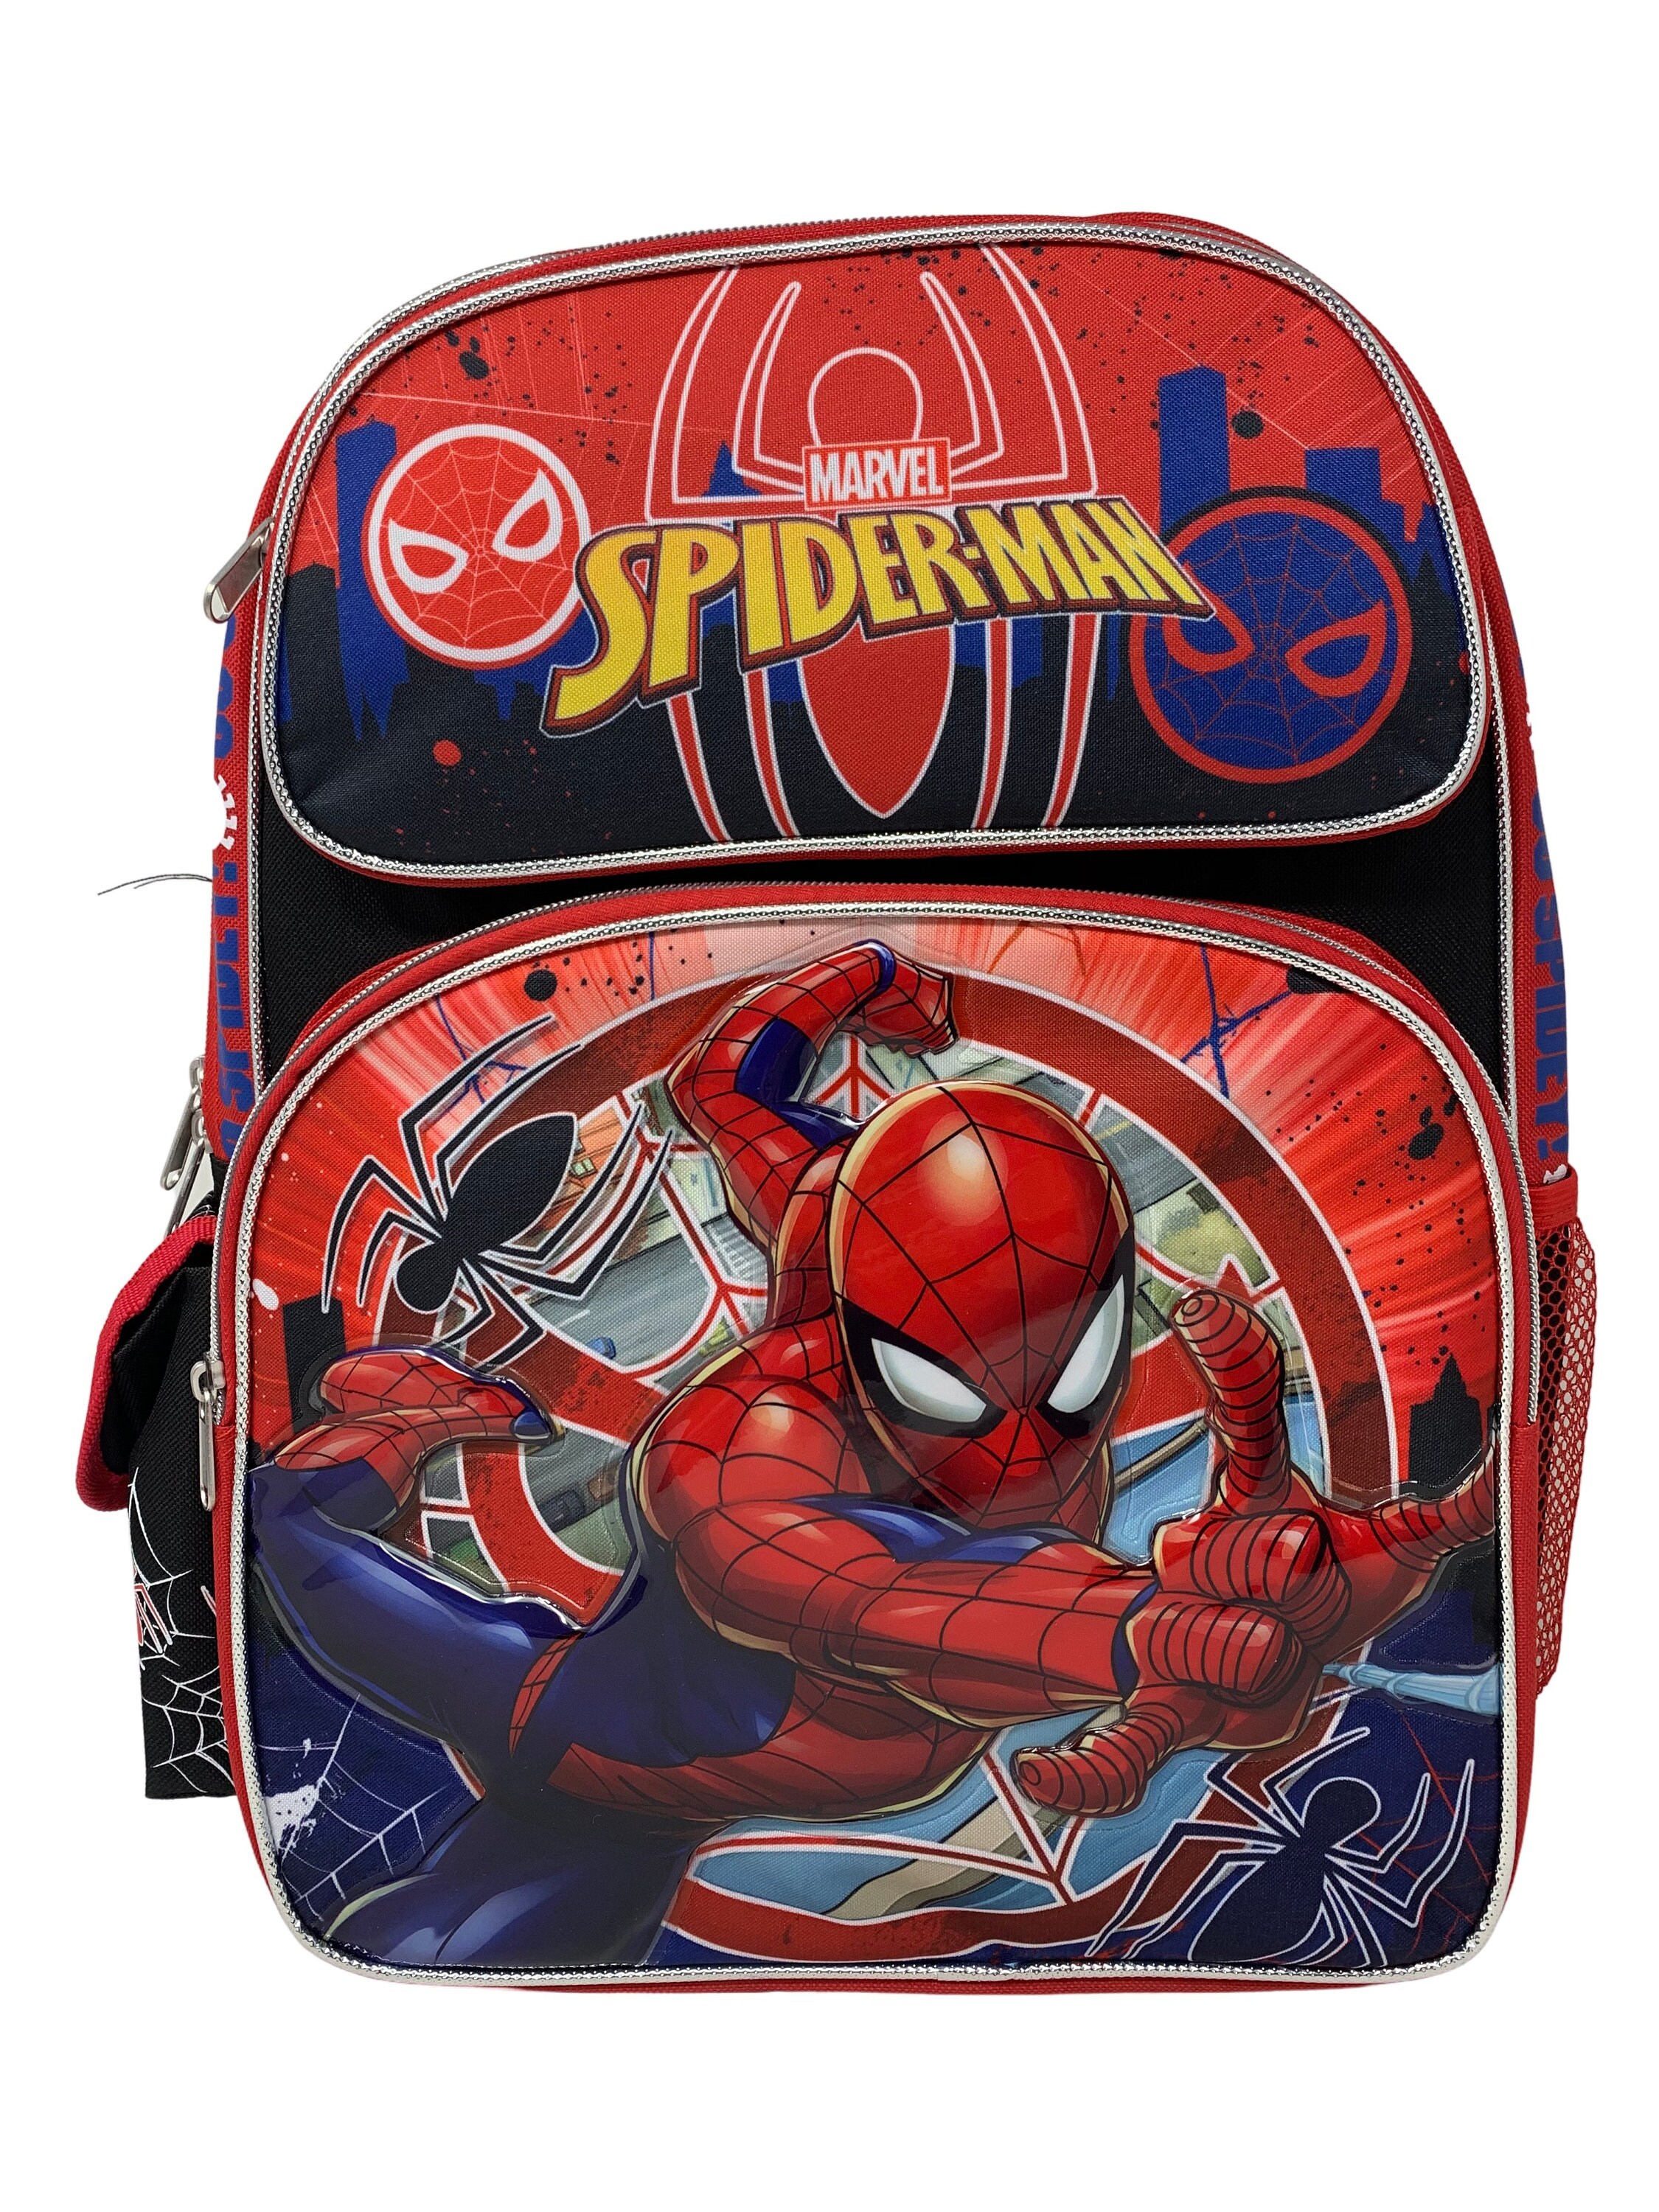 Personalization Marvel Spiderman 16 Boys Large School | Etsy